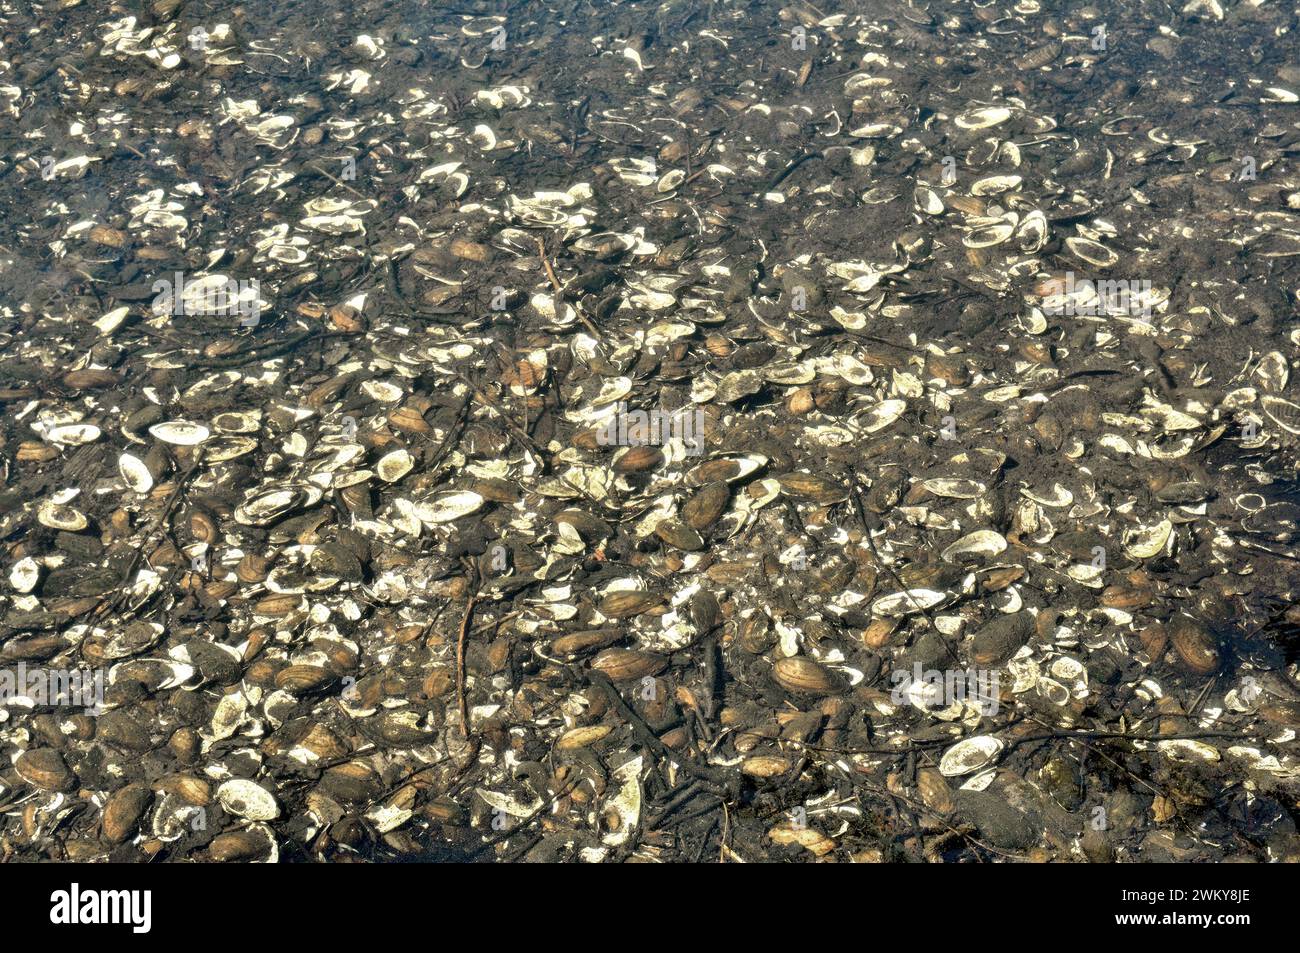 river mussels resp.Unio crassus in Nette River,lower rhine region,North Rhine Westphalia,Germany Stock Photo